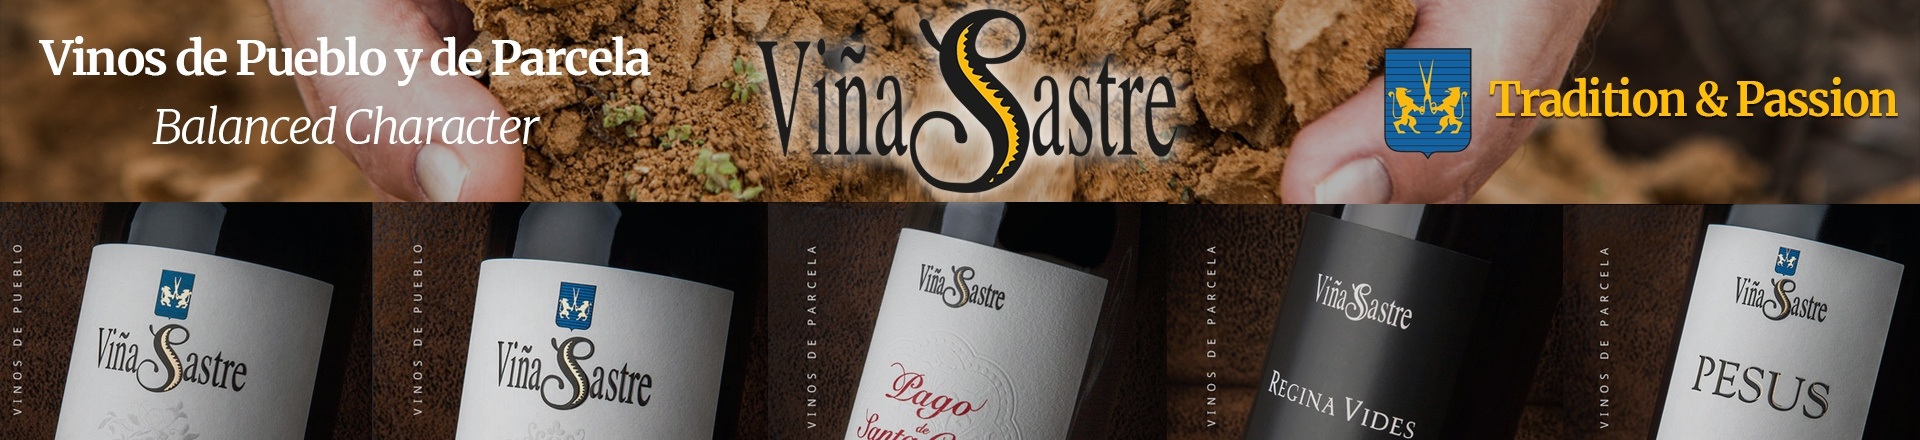 Viña Sastre Wines - VinosRibera.com